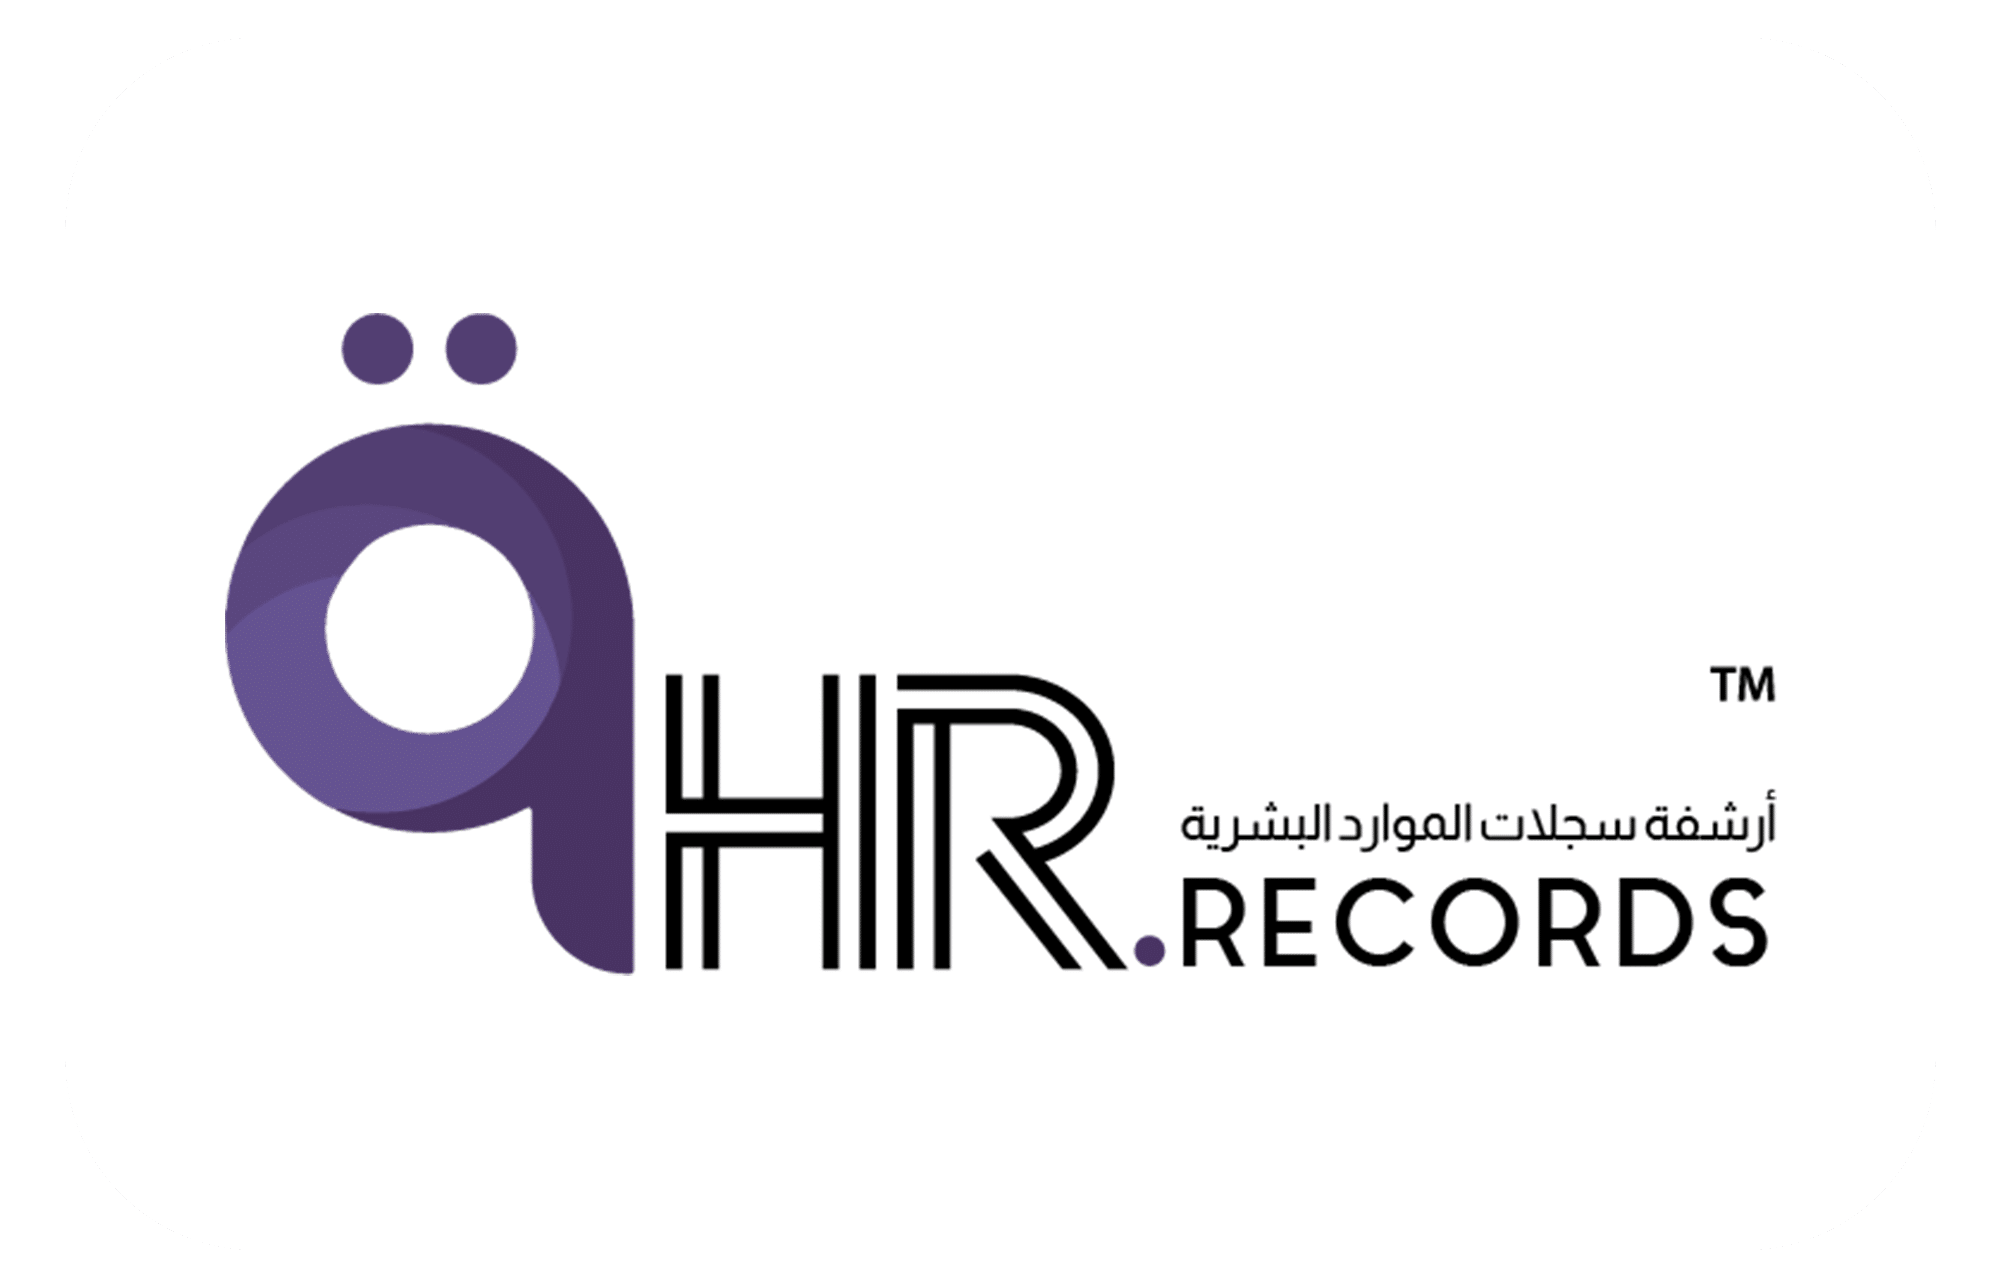 qHR Record